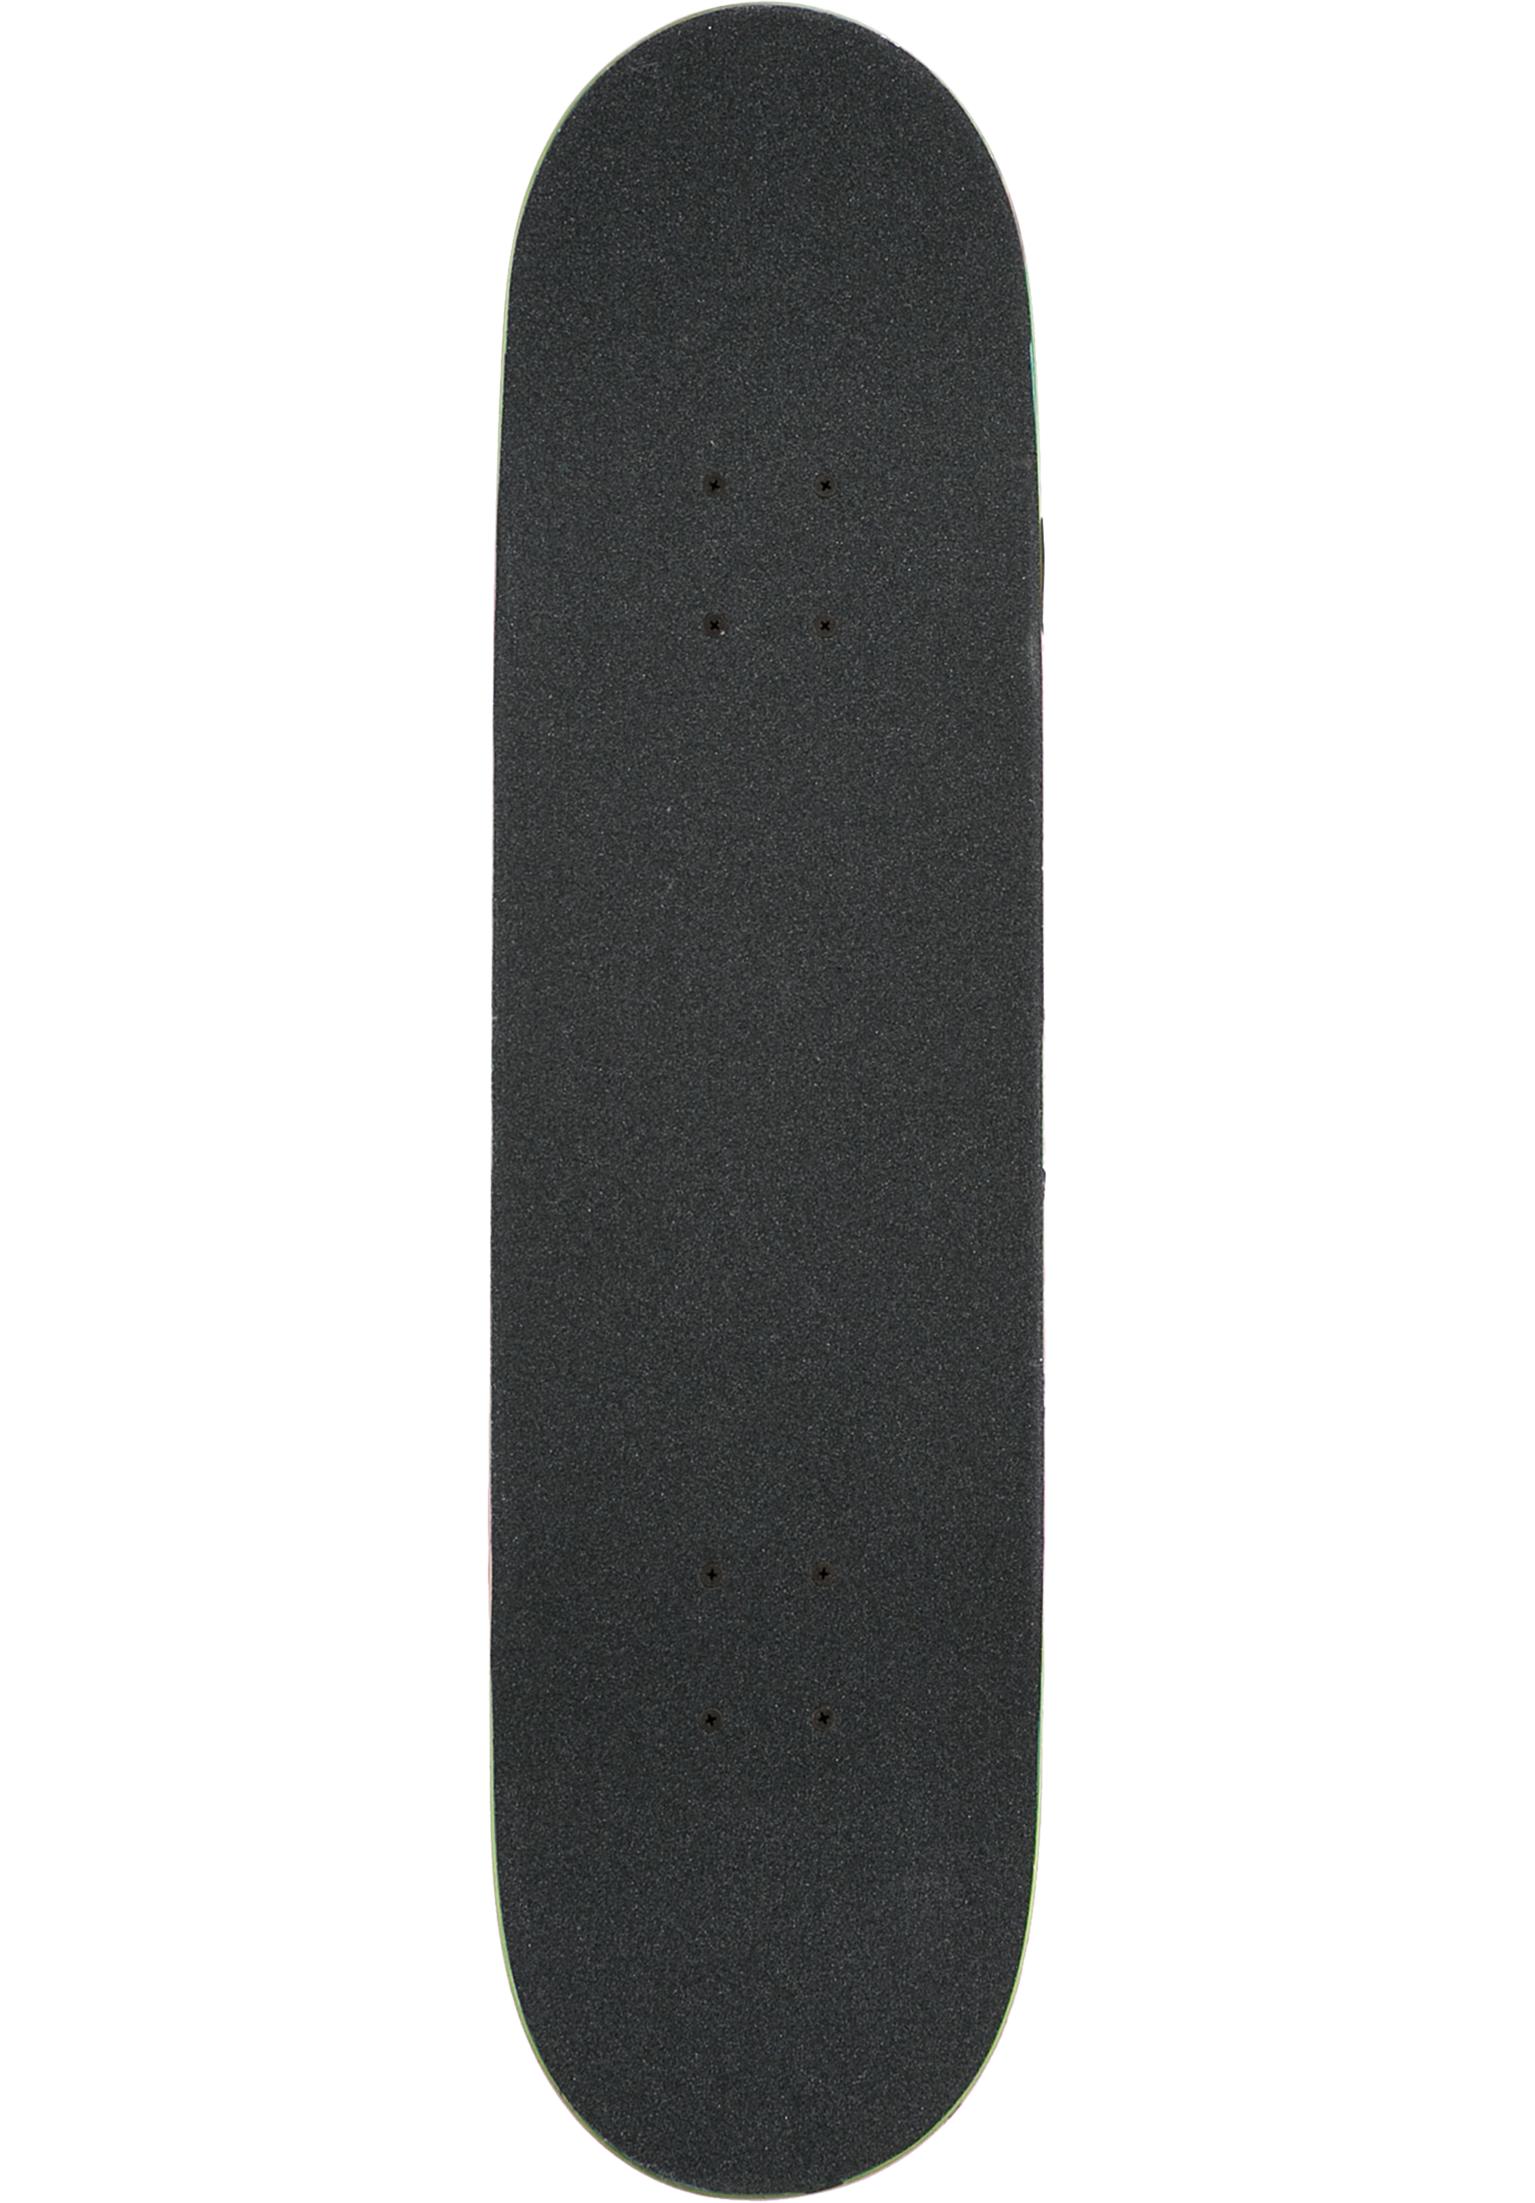 Zero American Punk 7.75 compleet skateboard